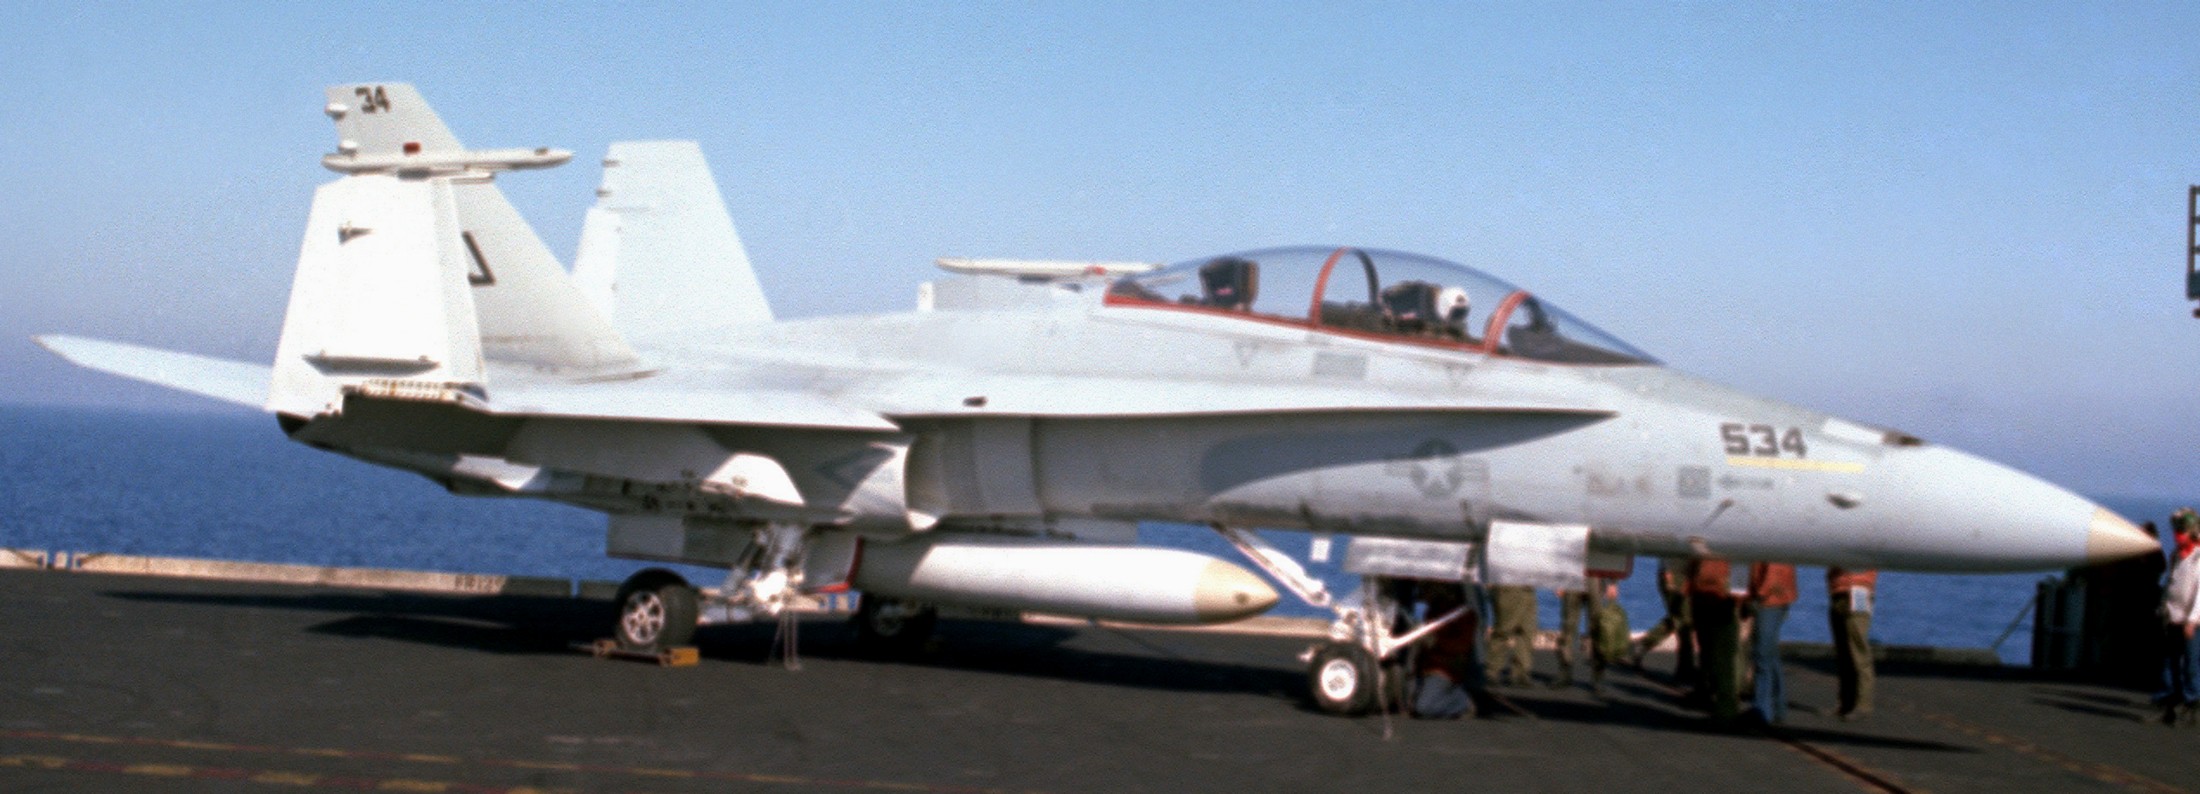 vfa-125 rough raiders strike fighter squadron f/a-18b hornet 1983 43